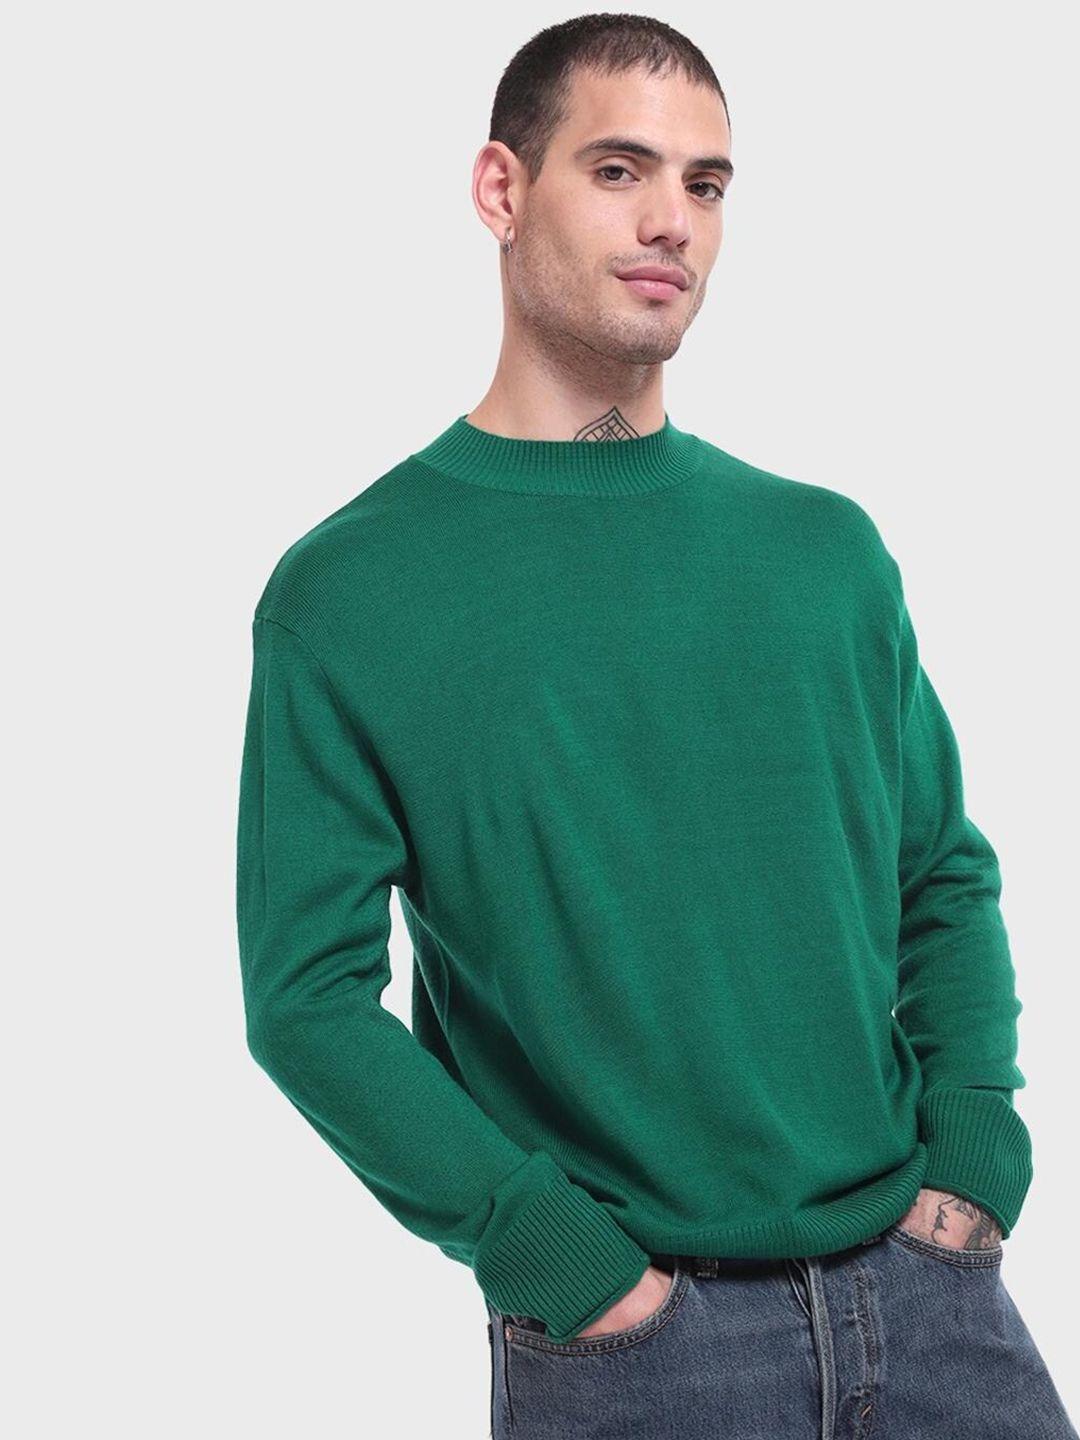 bewakoof-men-green-acrylic-pullover-sweater